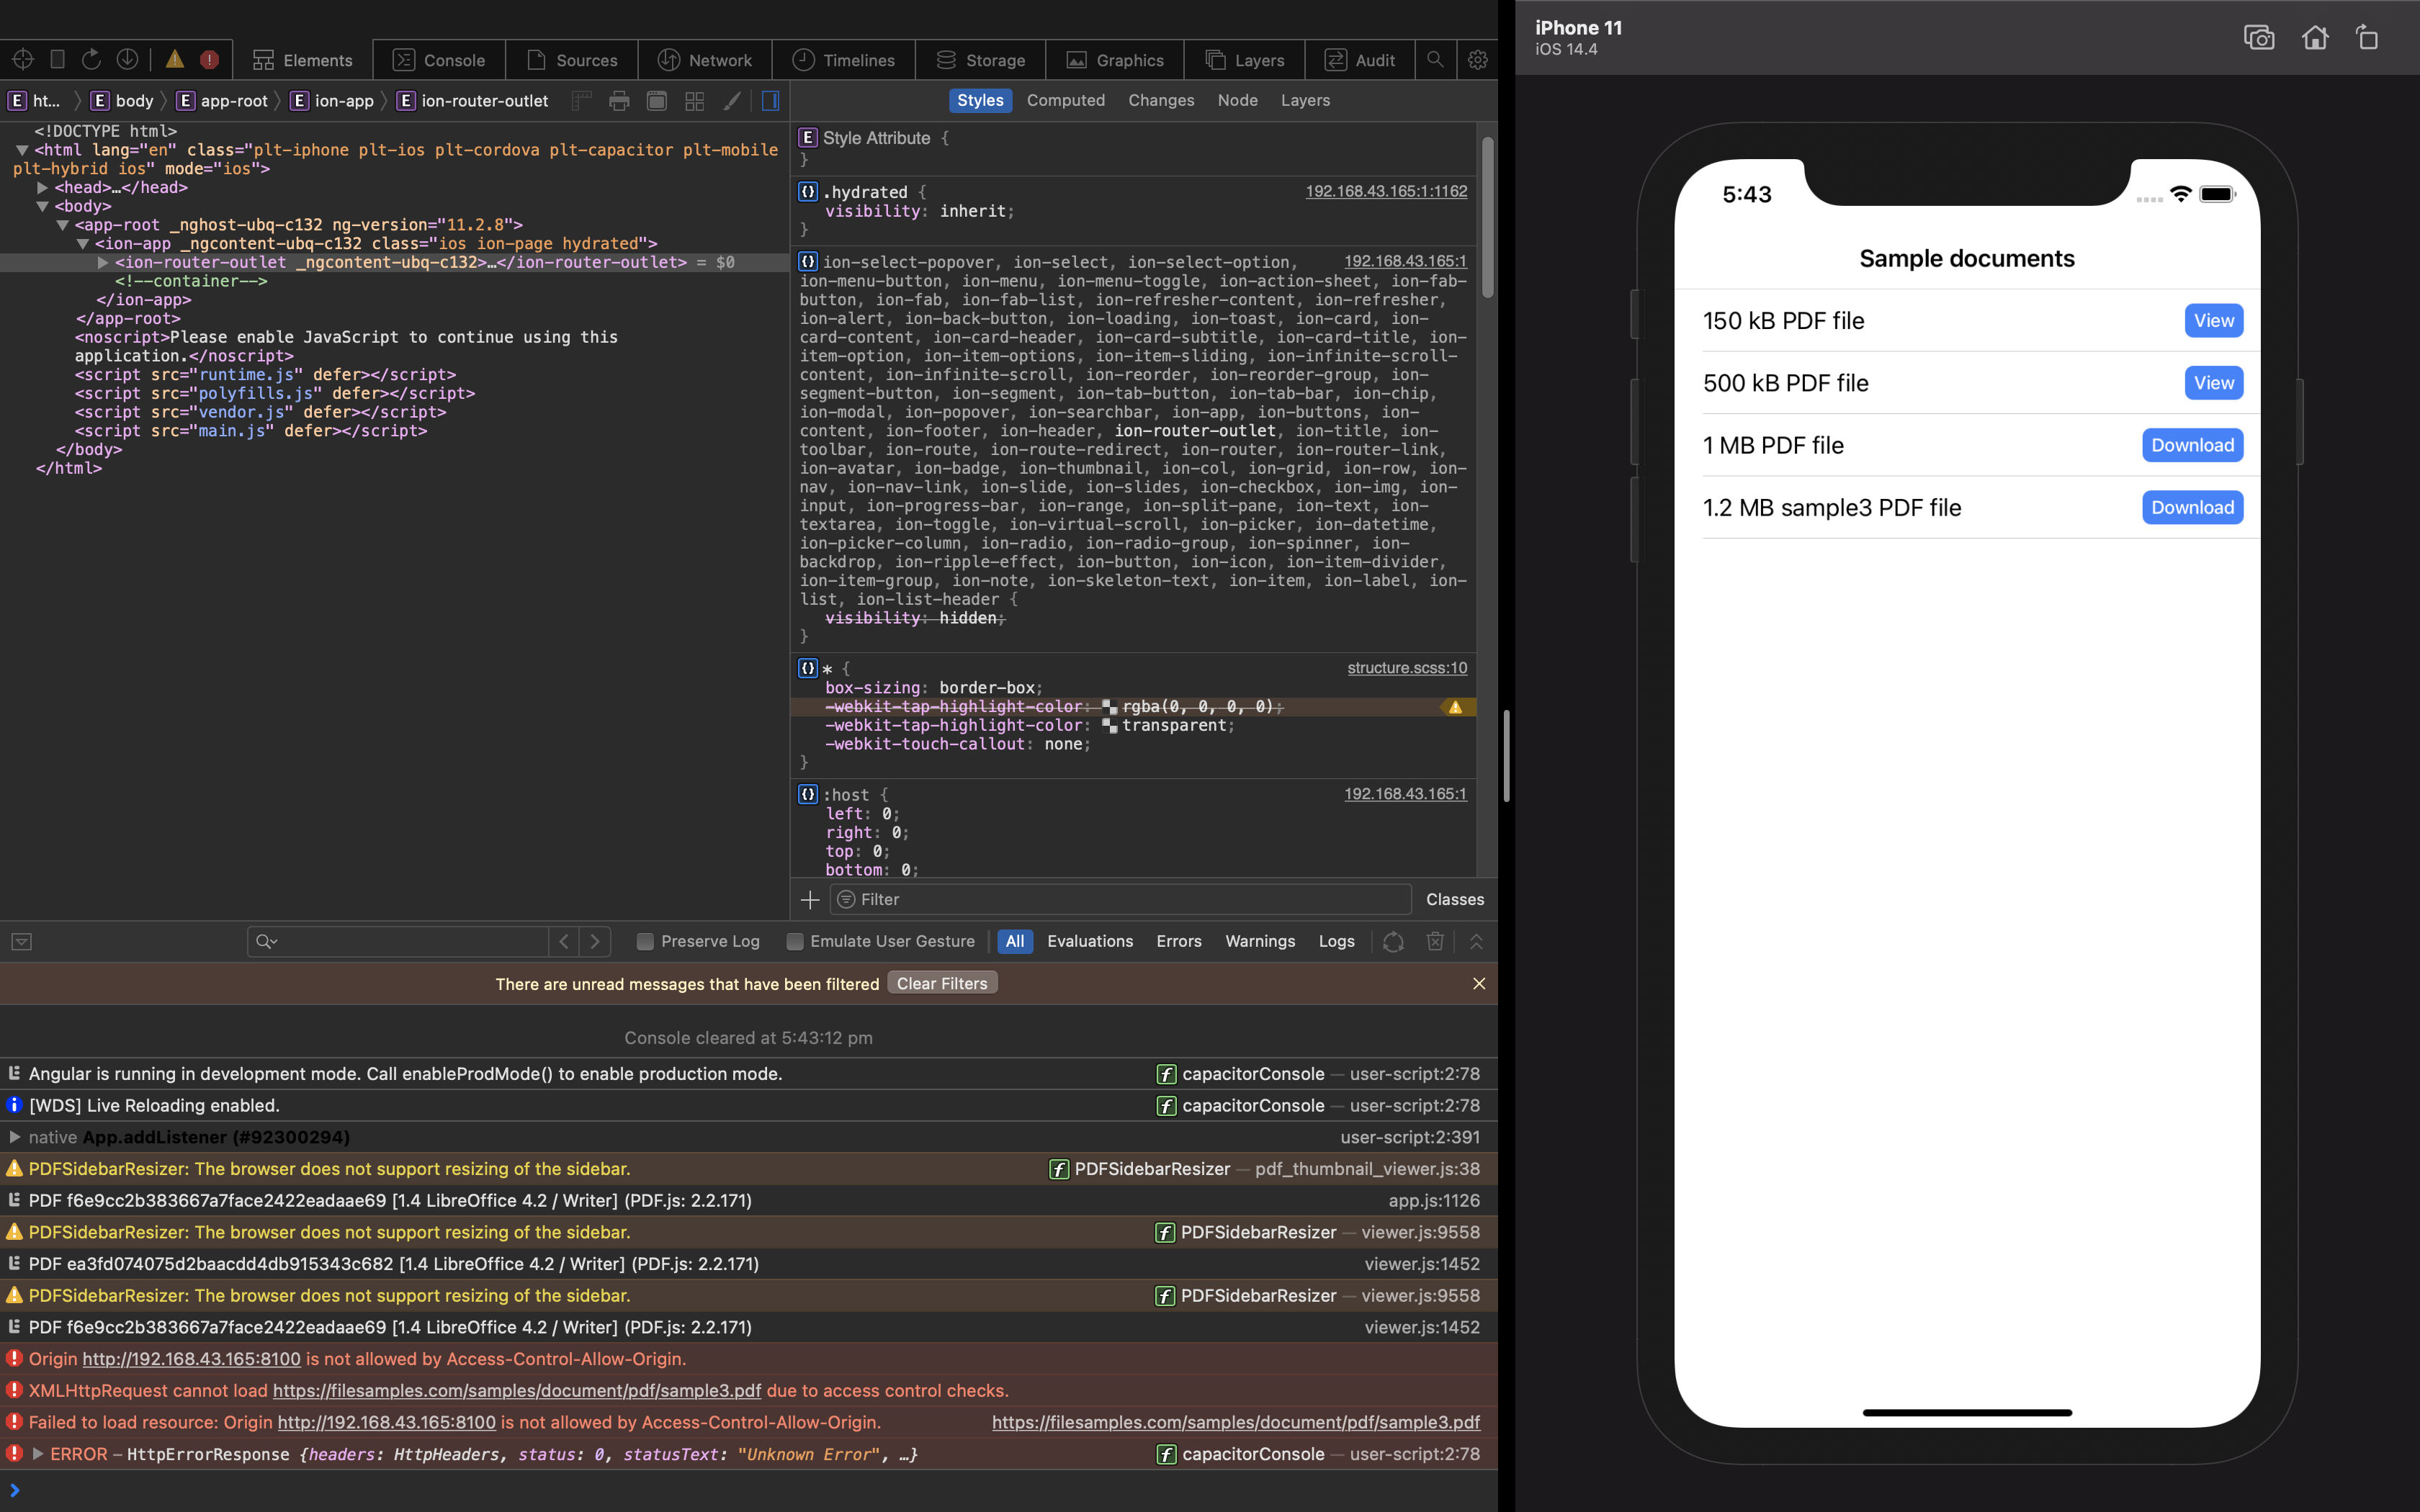 Remote debugging using Safari web inspector running the app on iOS simulator